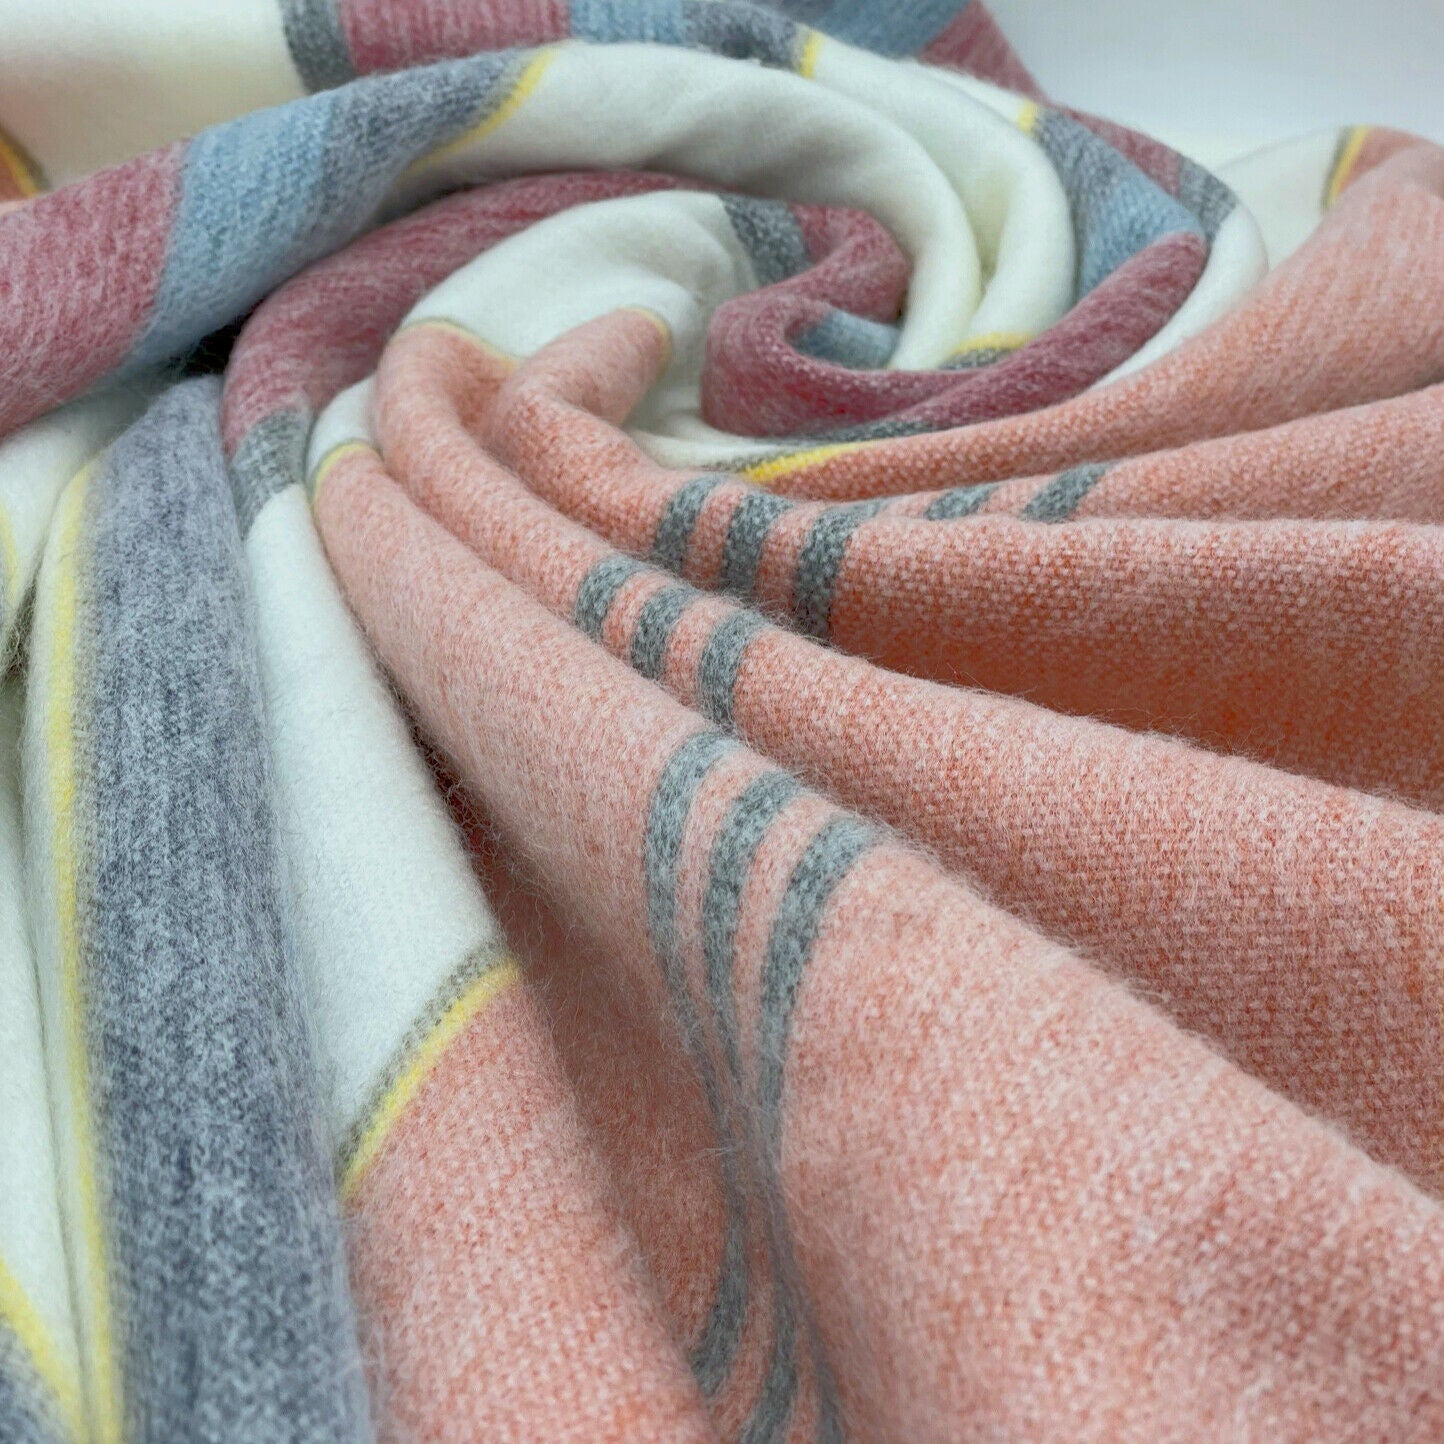 Rucu - Baby Alpaca Wool Throw Blanket / Sofa Cover - Queen 95" x 63" - multi colored stripes pattern